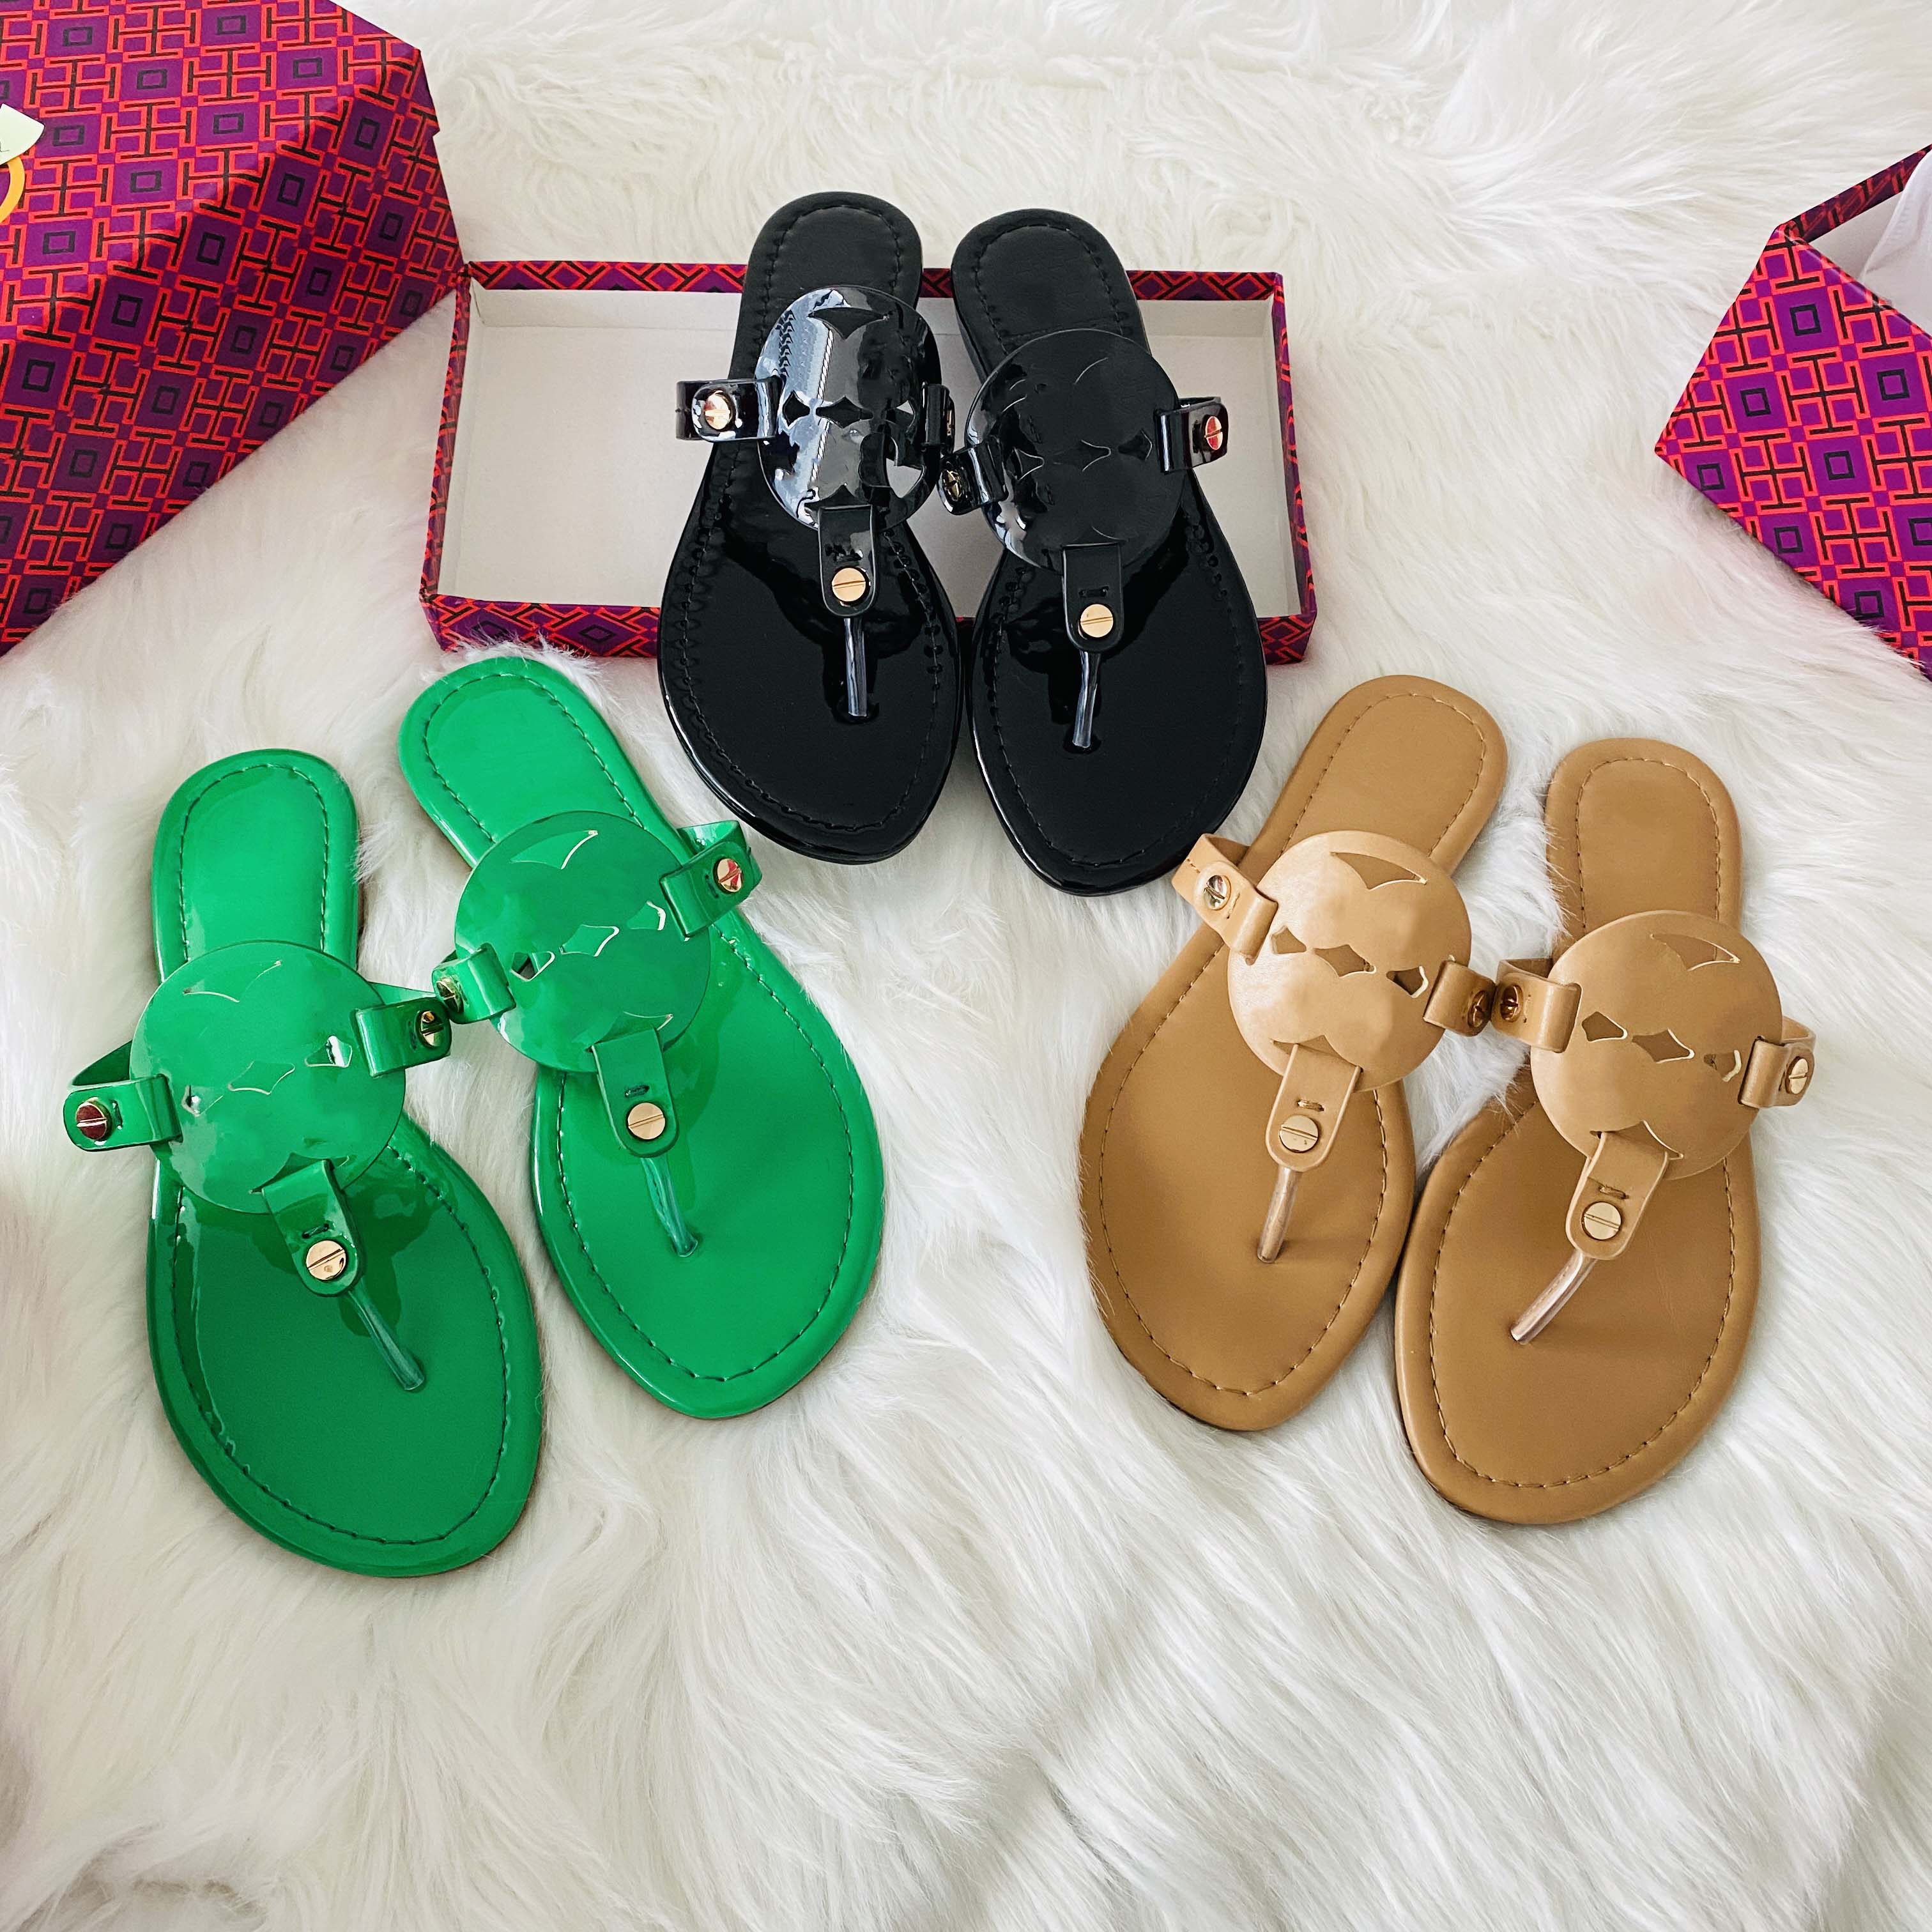 

Luxury Brand Sandals Designer Slippers Slides Floral Brocade Genuine Leather Flip Flops Women Shoes Sandal without box by shoe10 20, #19